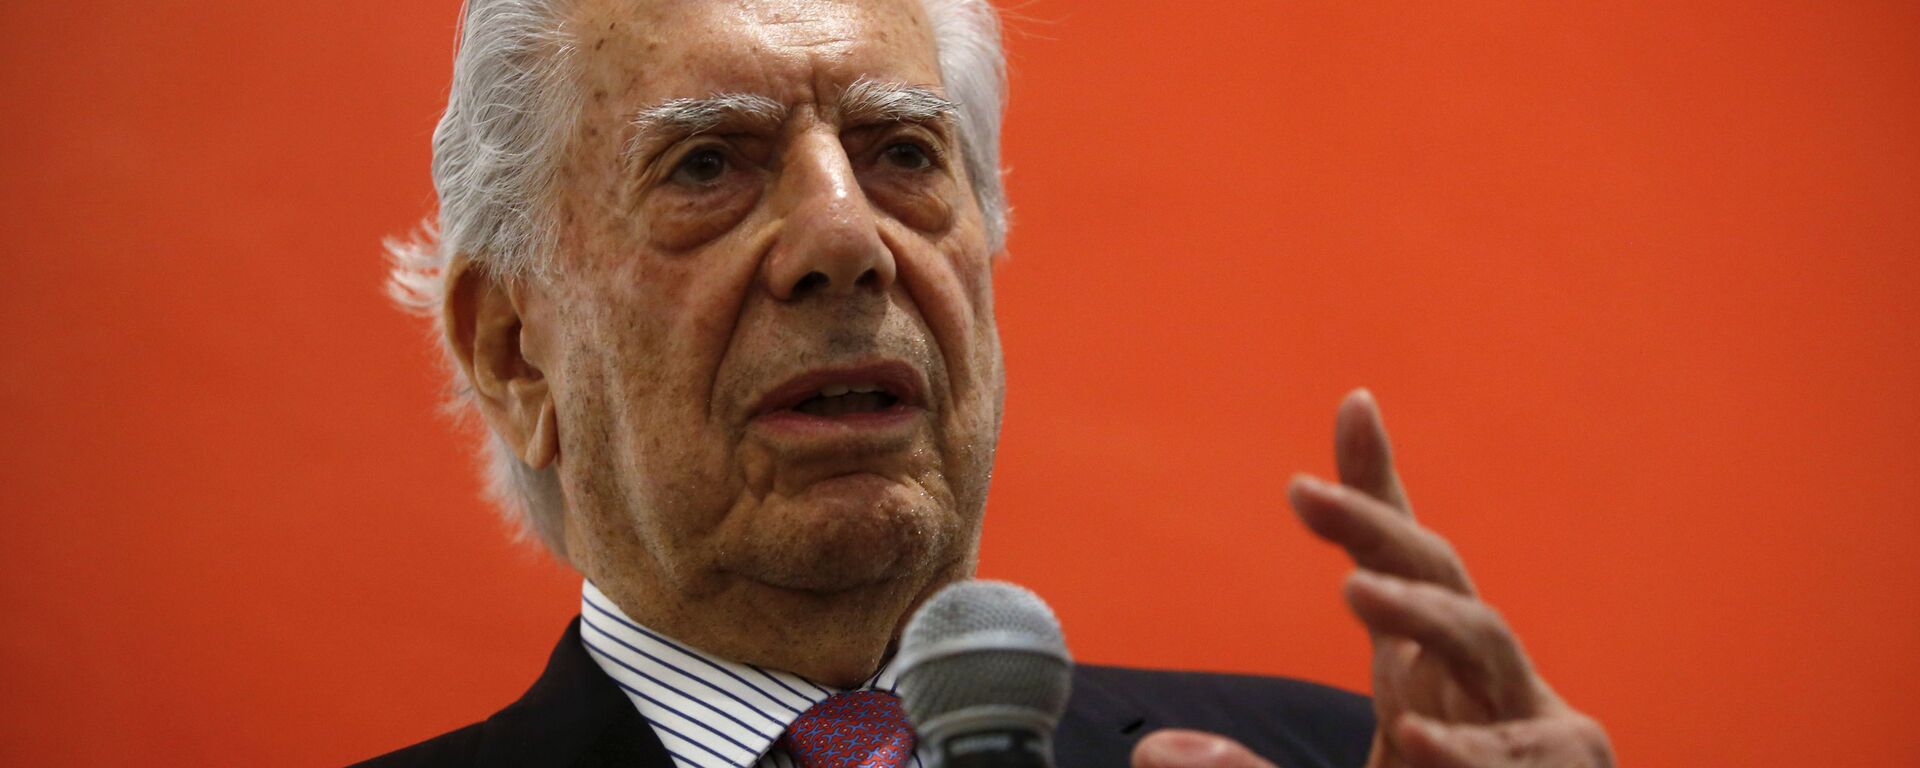 Mario Vargas Llosa, escritor peruano - Sputnik Mundo, 1920, 05.10.2021